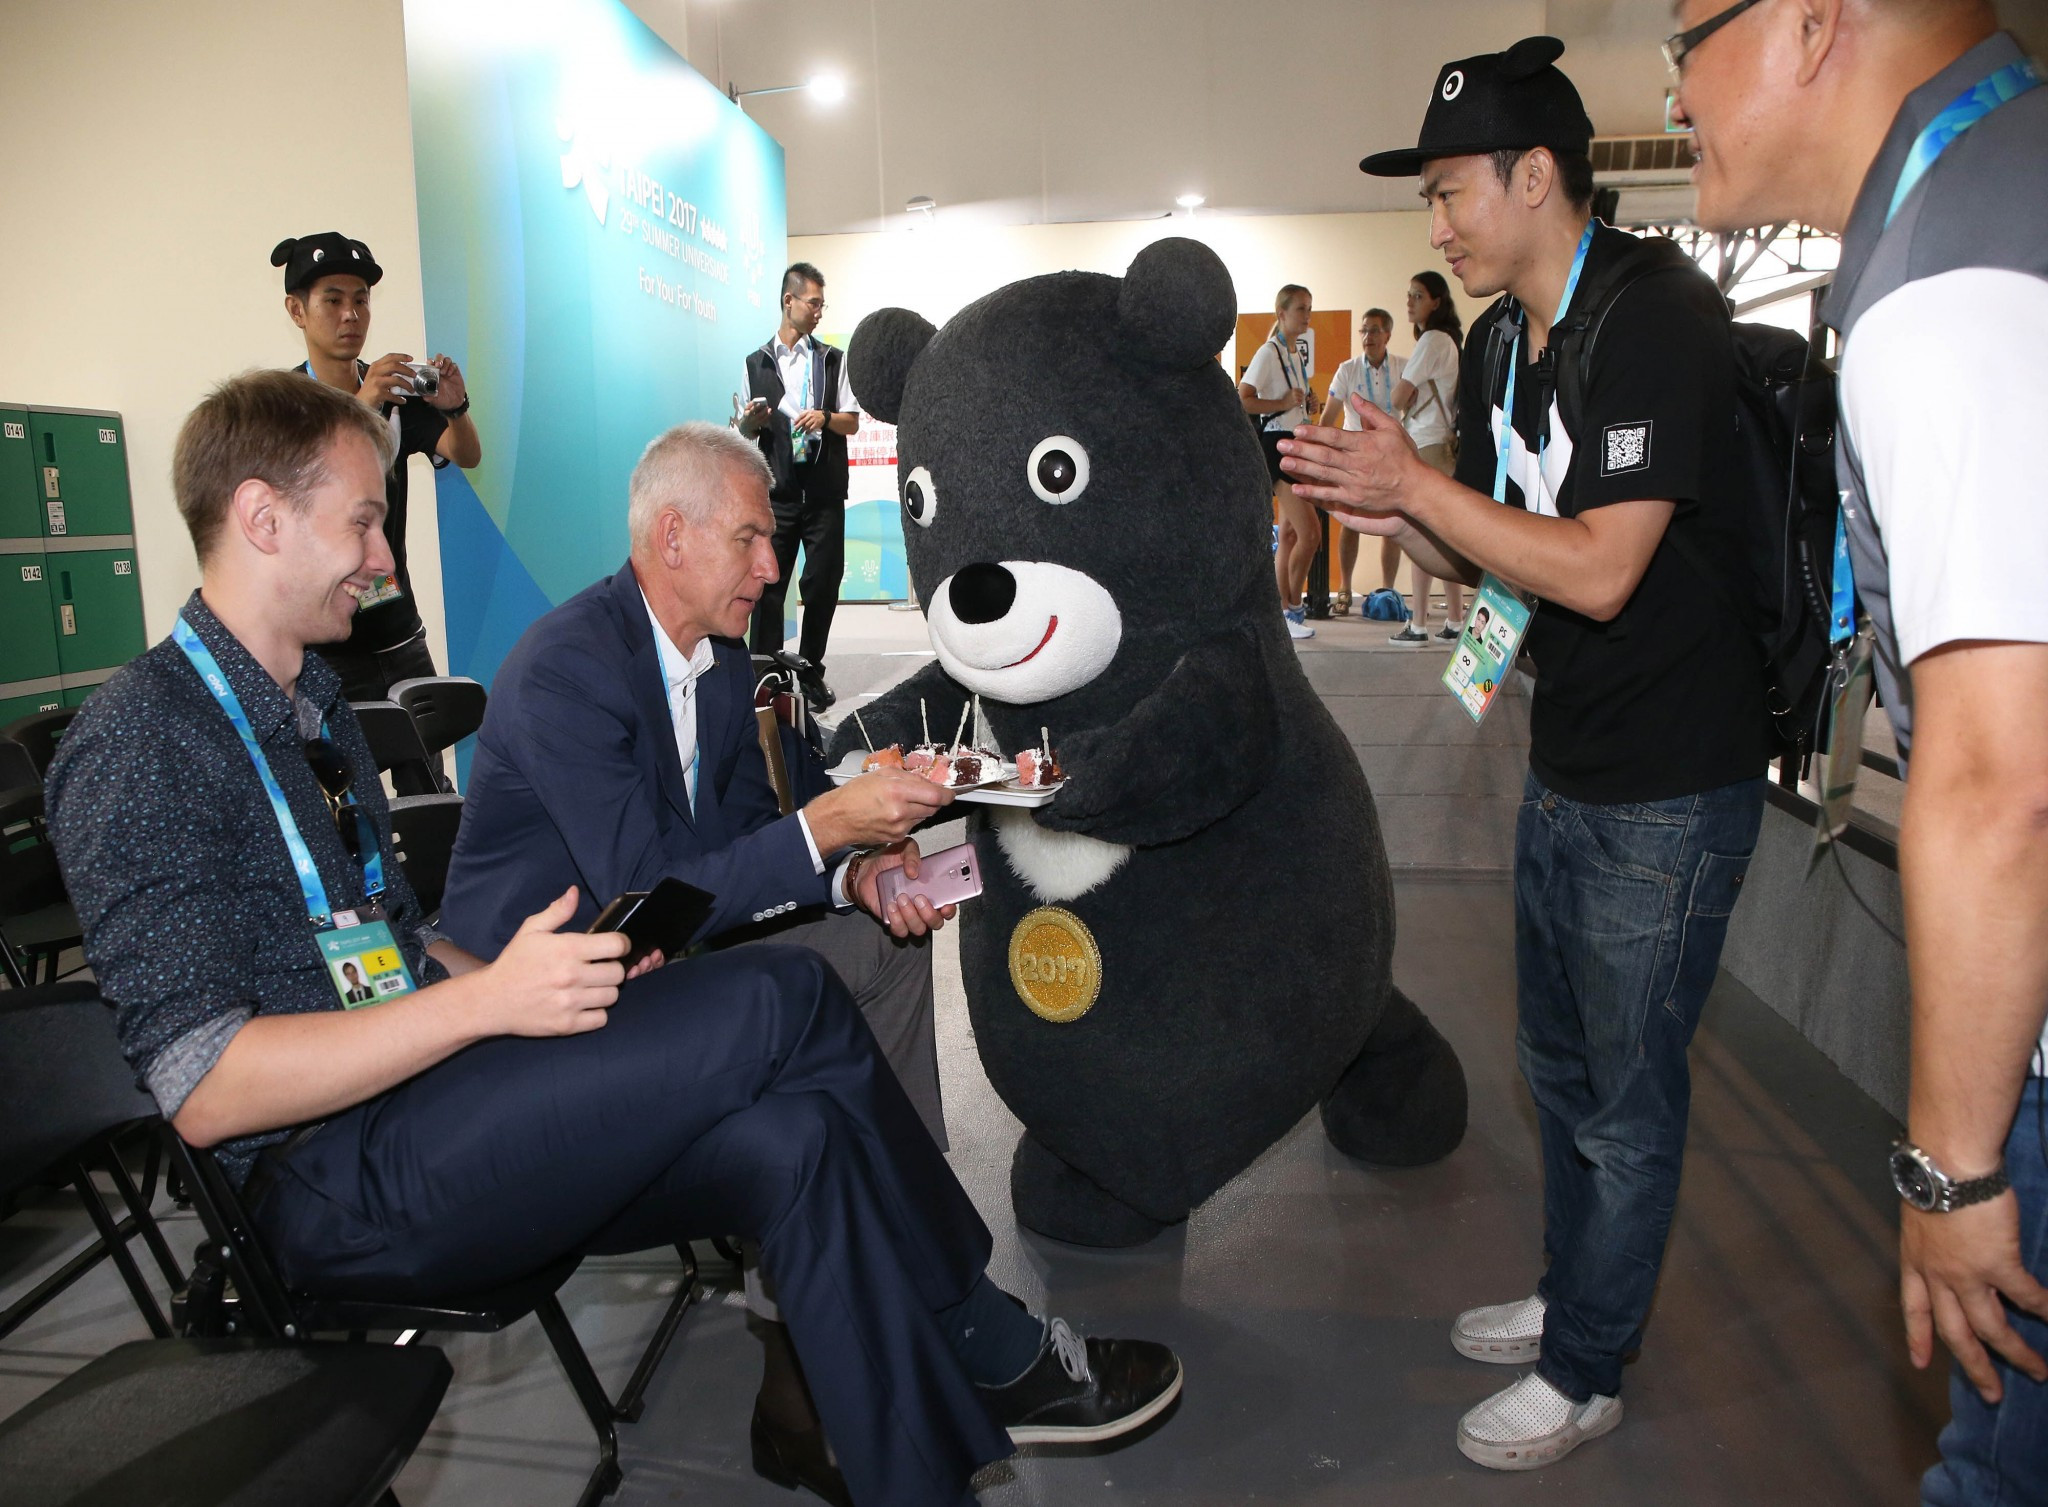 Bravo is based on the Formosan black bear ©Taipei 2017